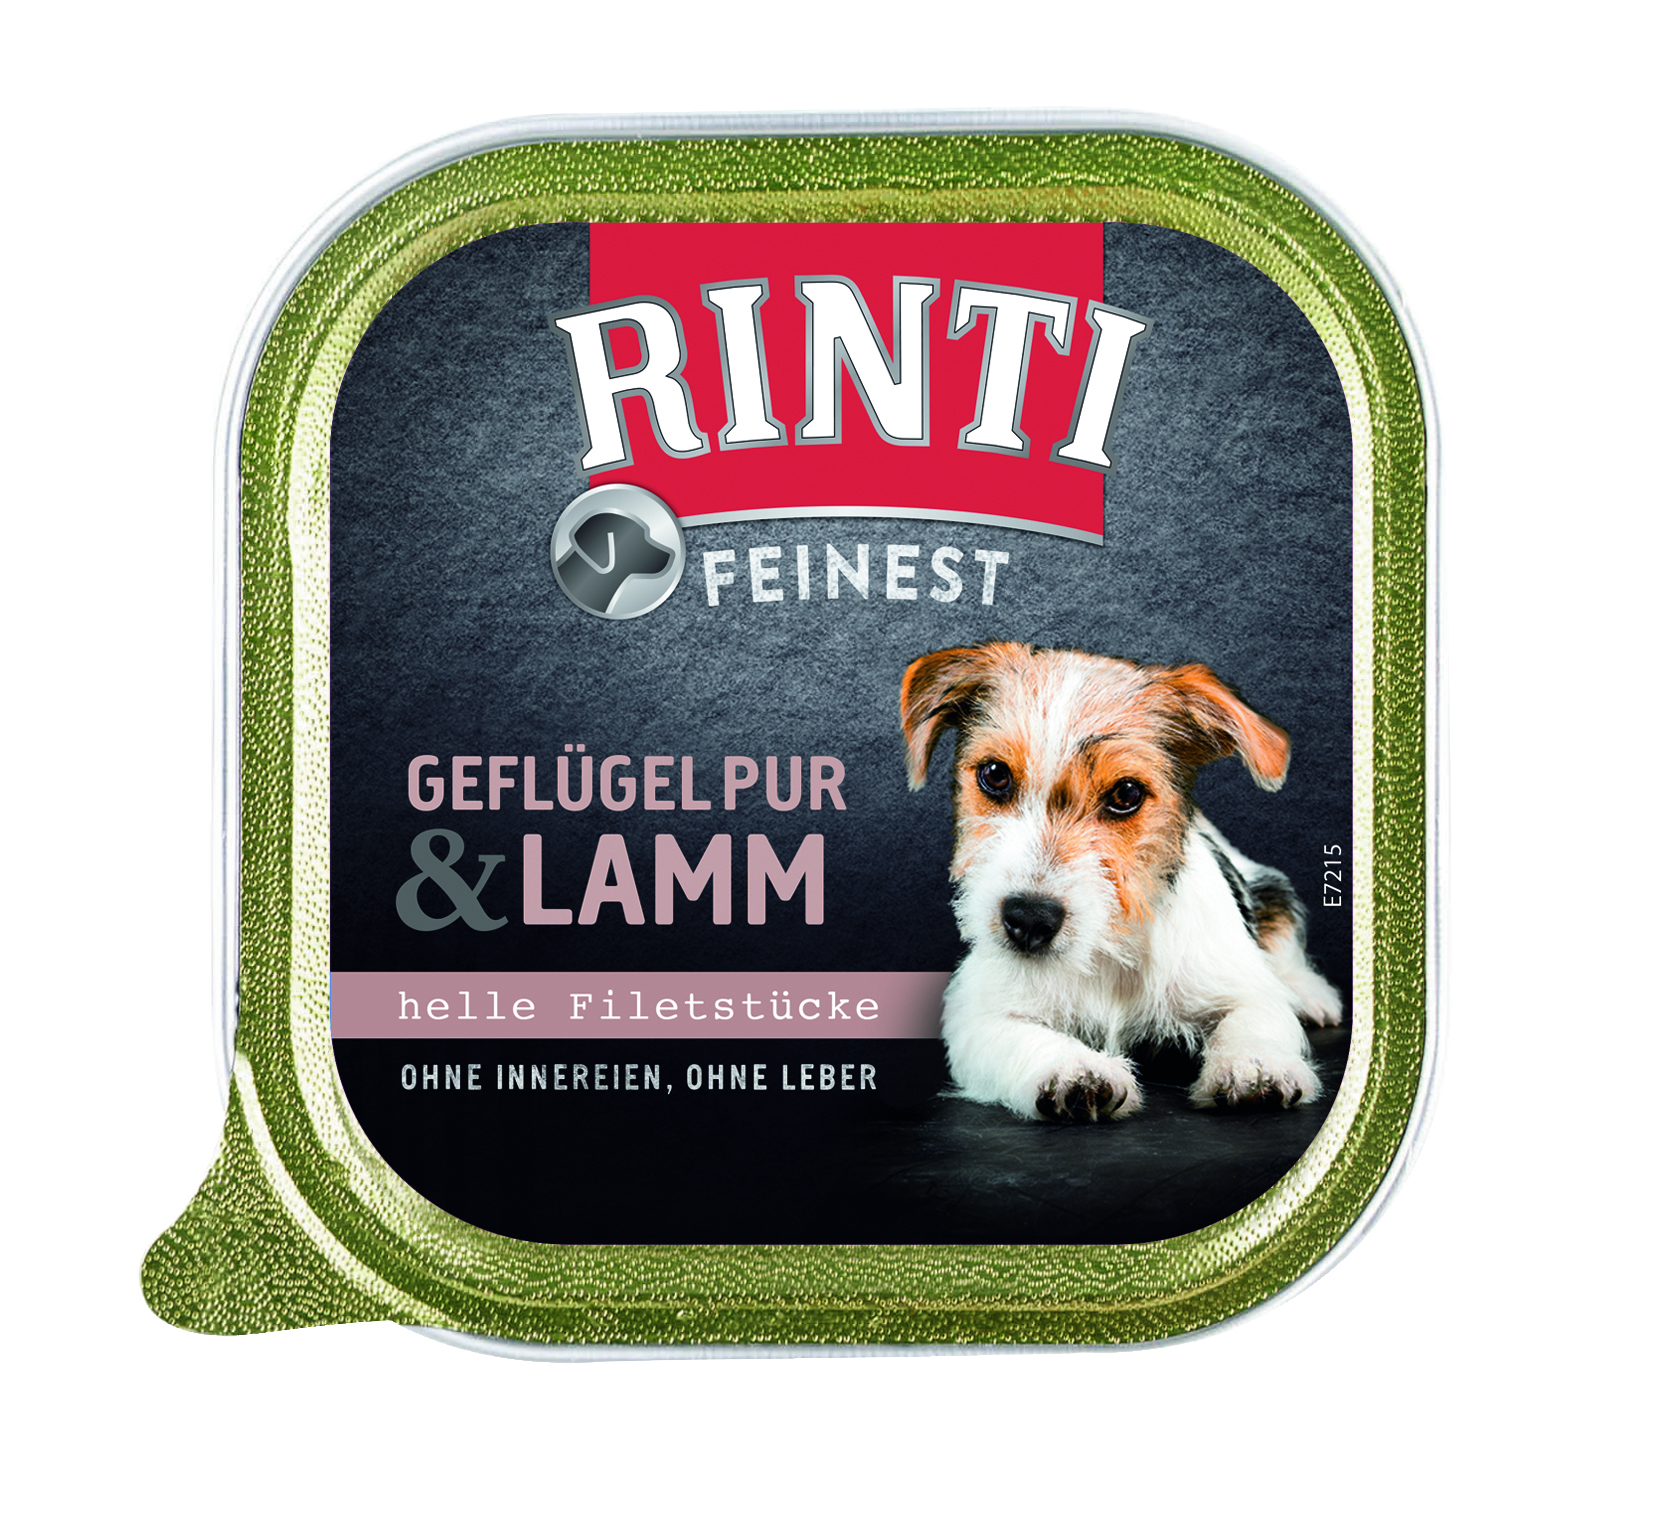 Rinti Feinest Adult 11x150g Geflügel pur & Lamm